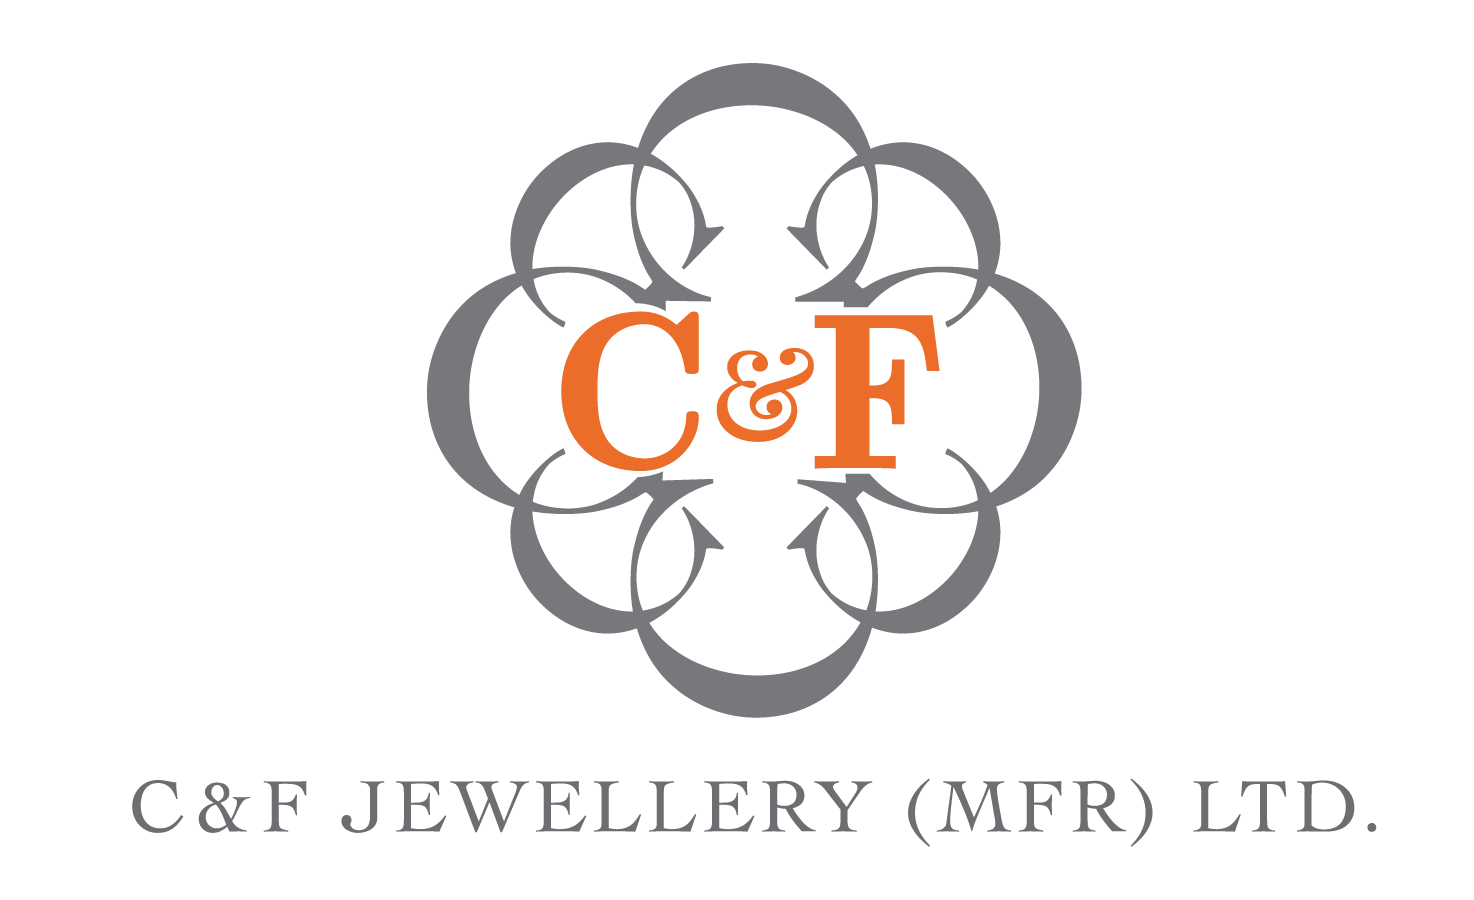 C&amp;F Jewellery (MFR) Ltd.